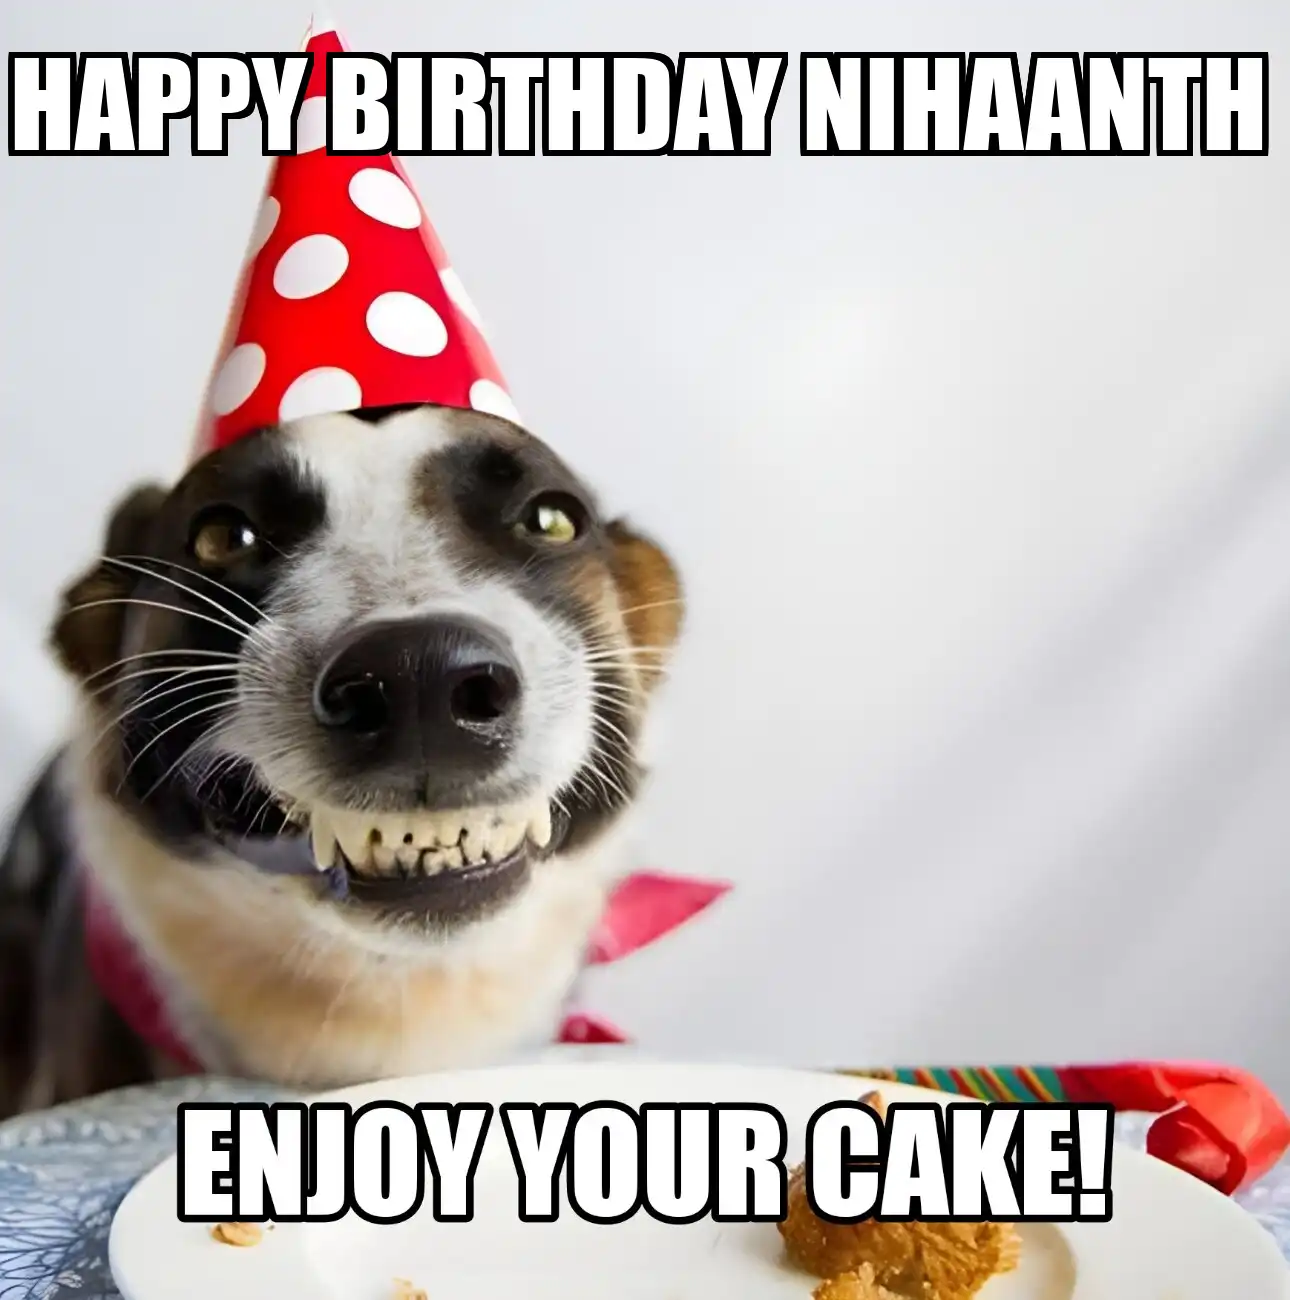 Happy Birthday Nihaanth Enjoy Your Cake Dog Meme